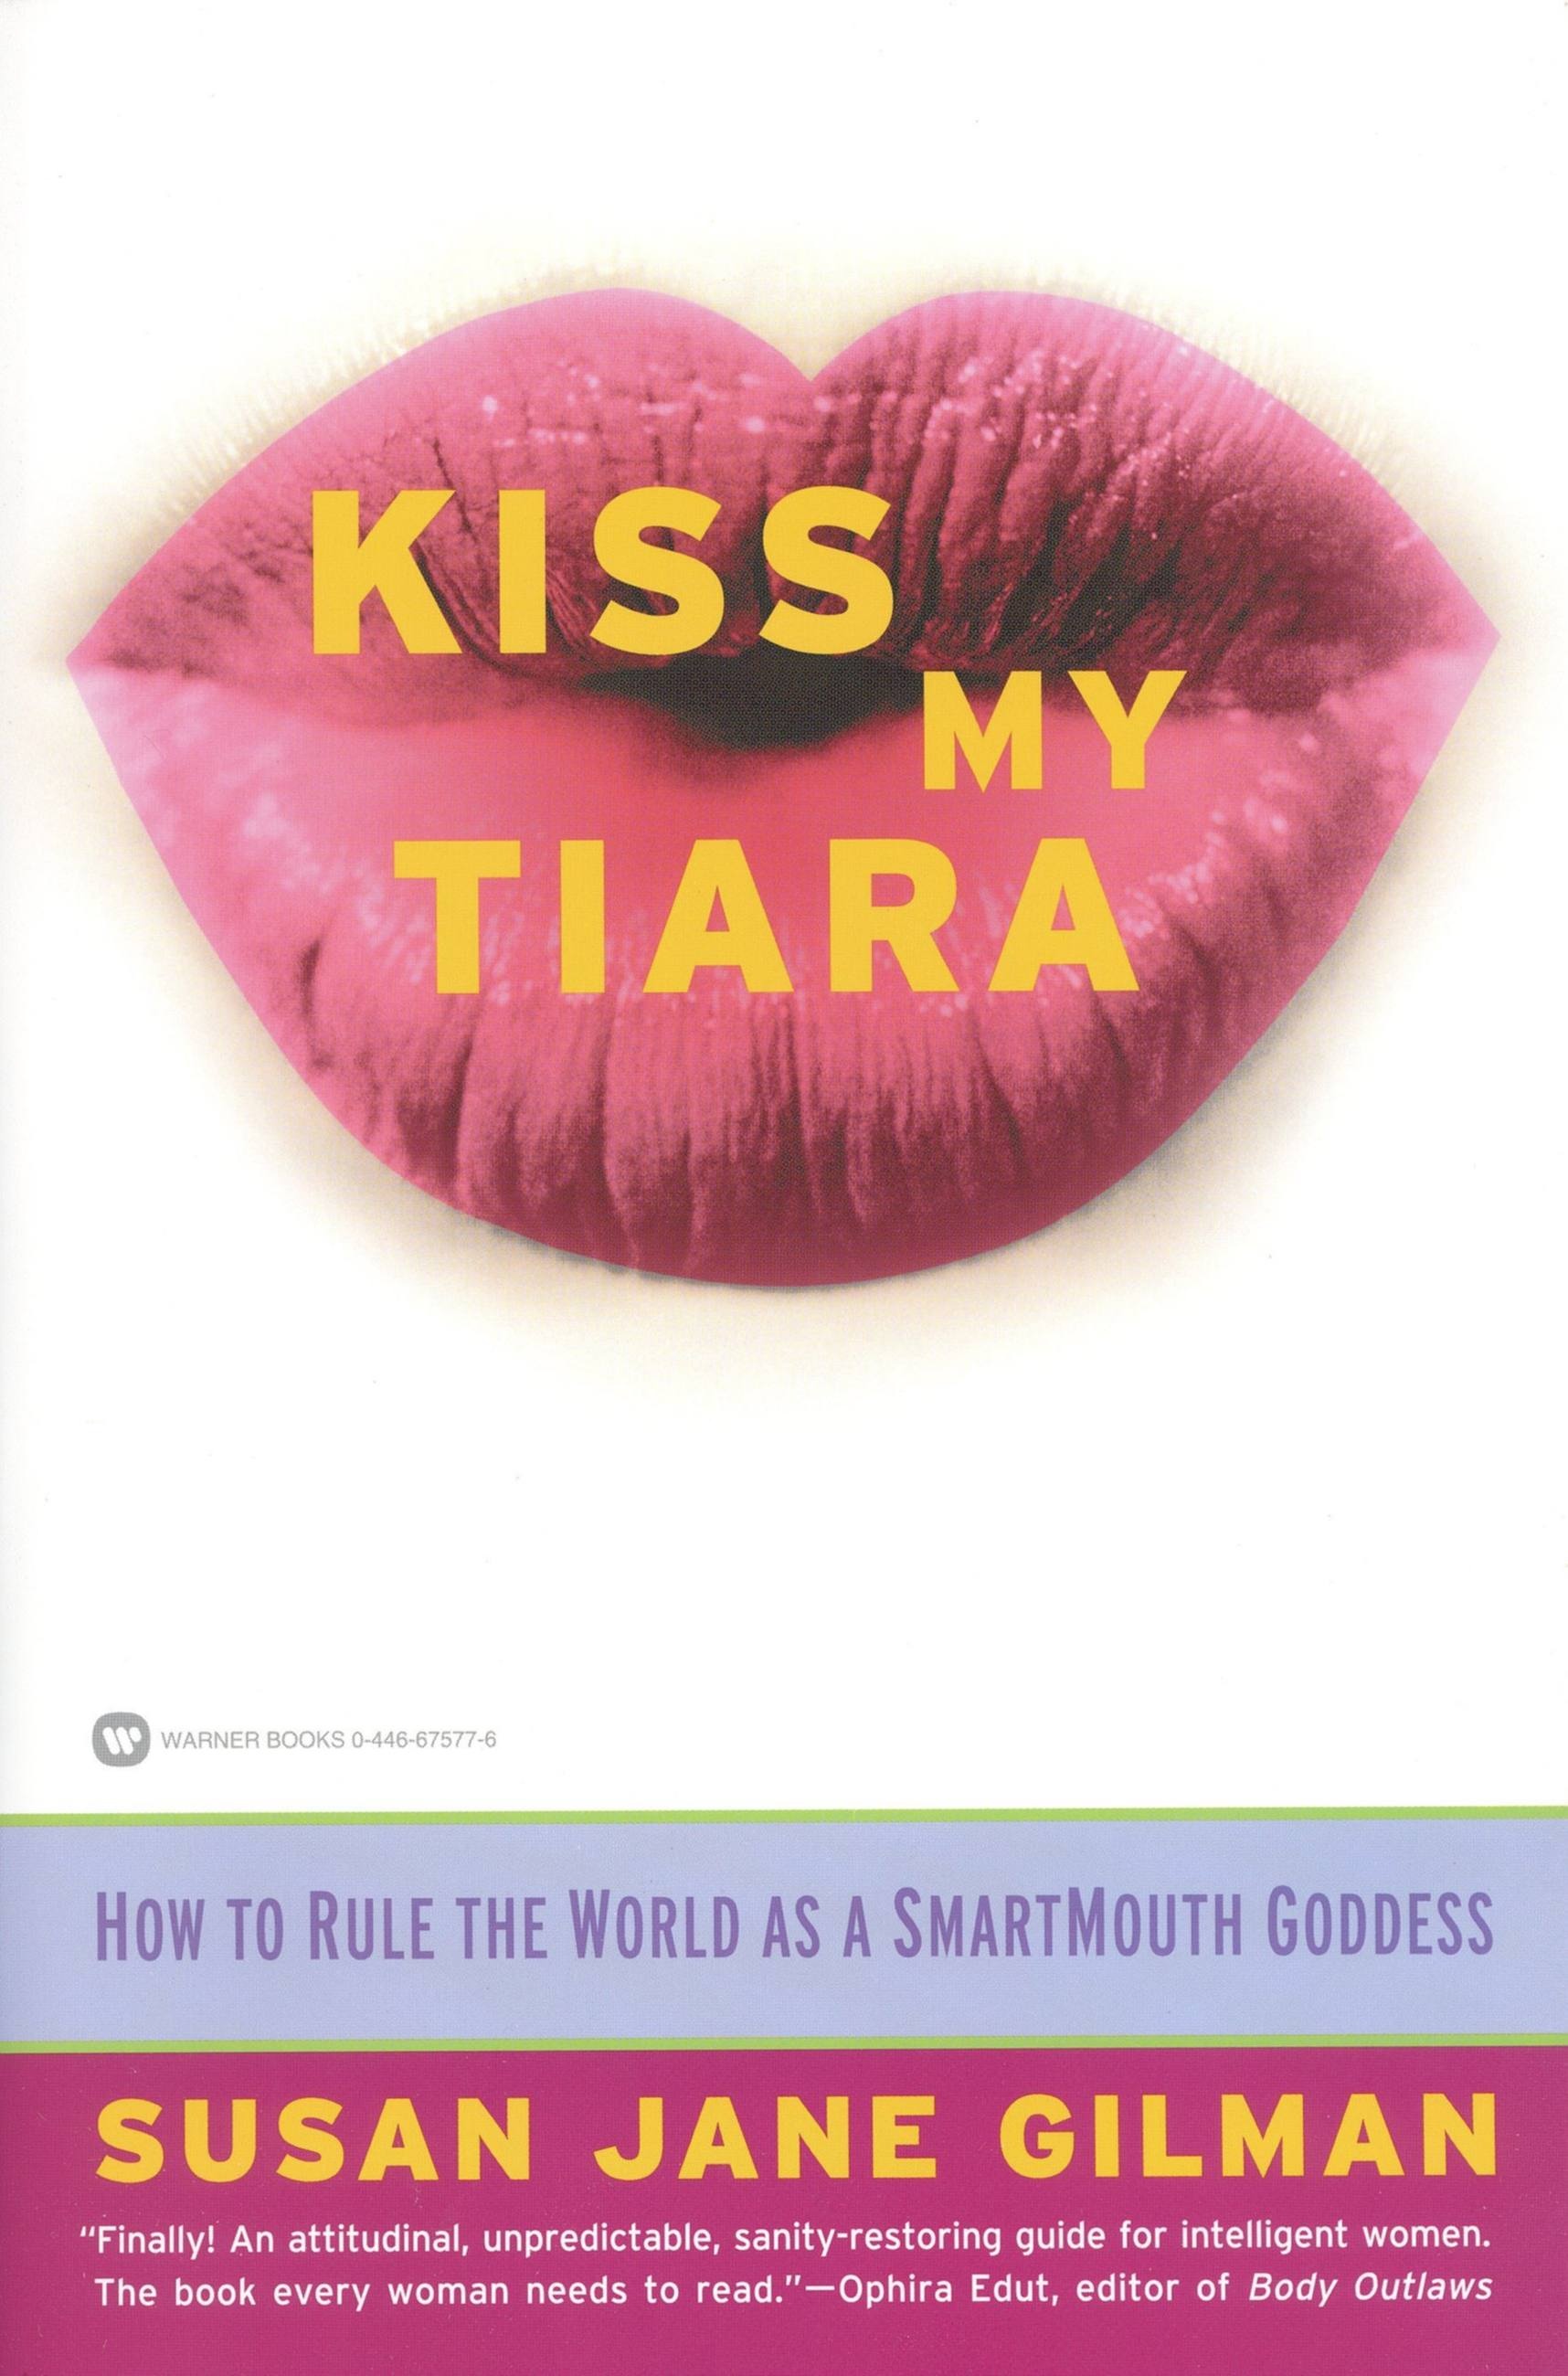 Skinny Hairy Teen Pussy - Kiss My Tiara by Susan Jane Gilman | Hachette Book Group